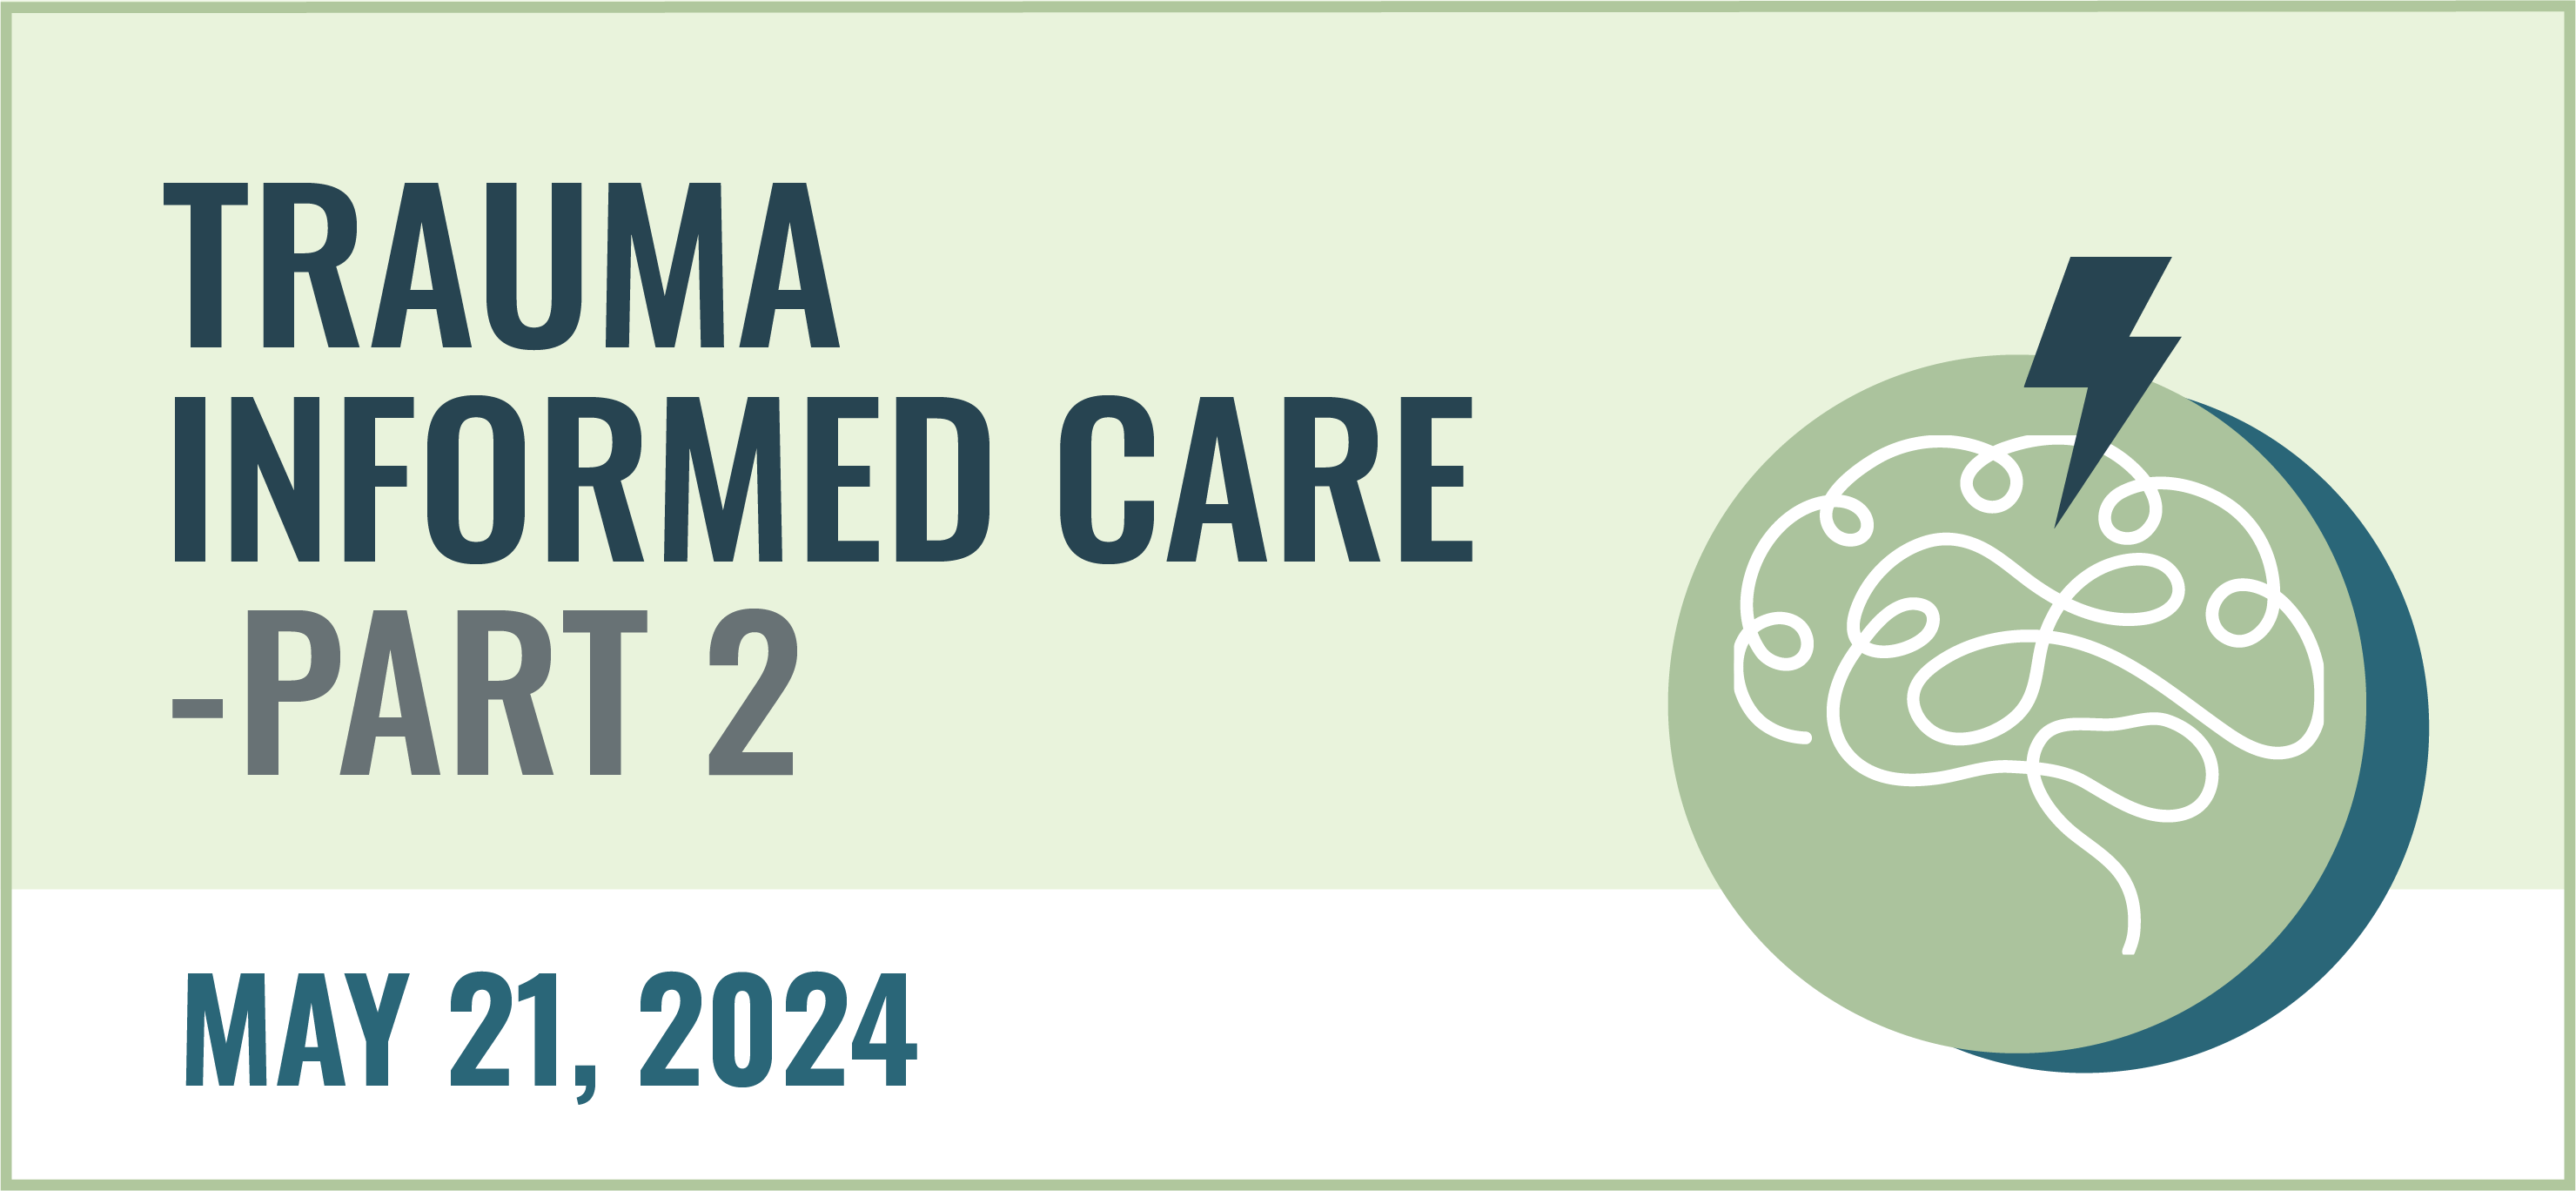 Trauma Informed Care. May 21, 2024.